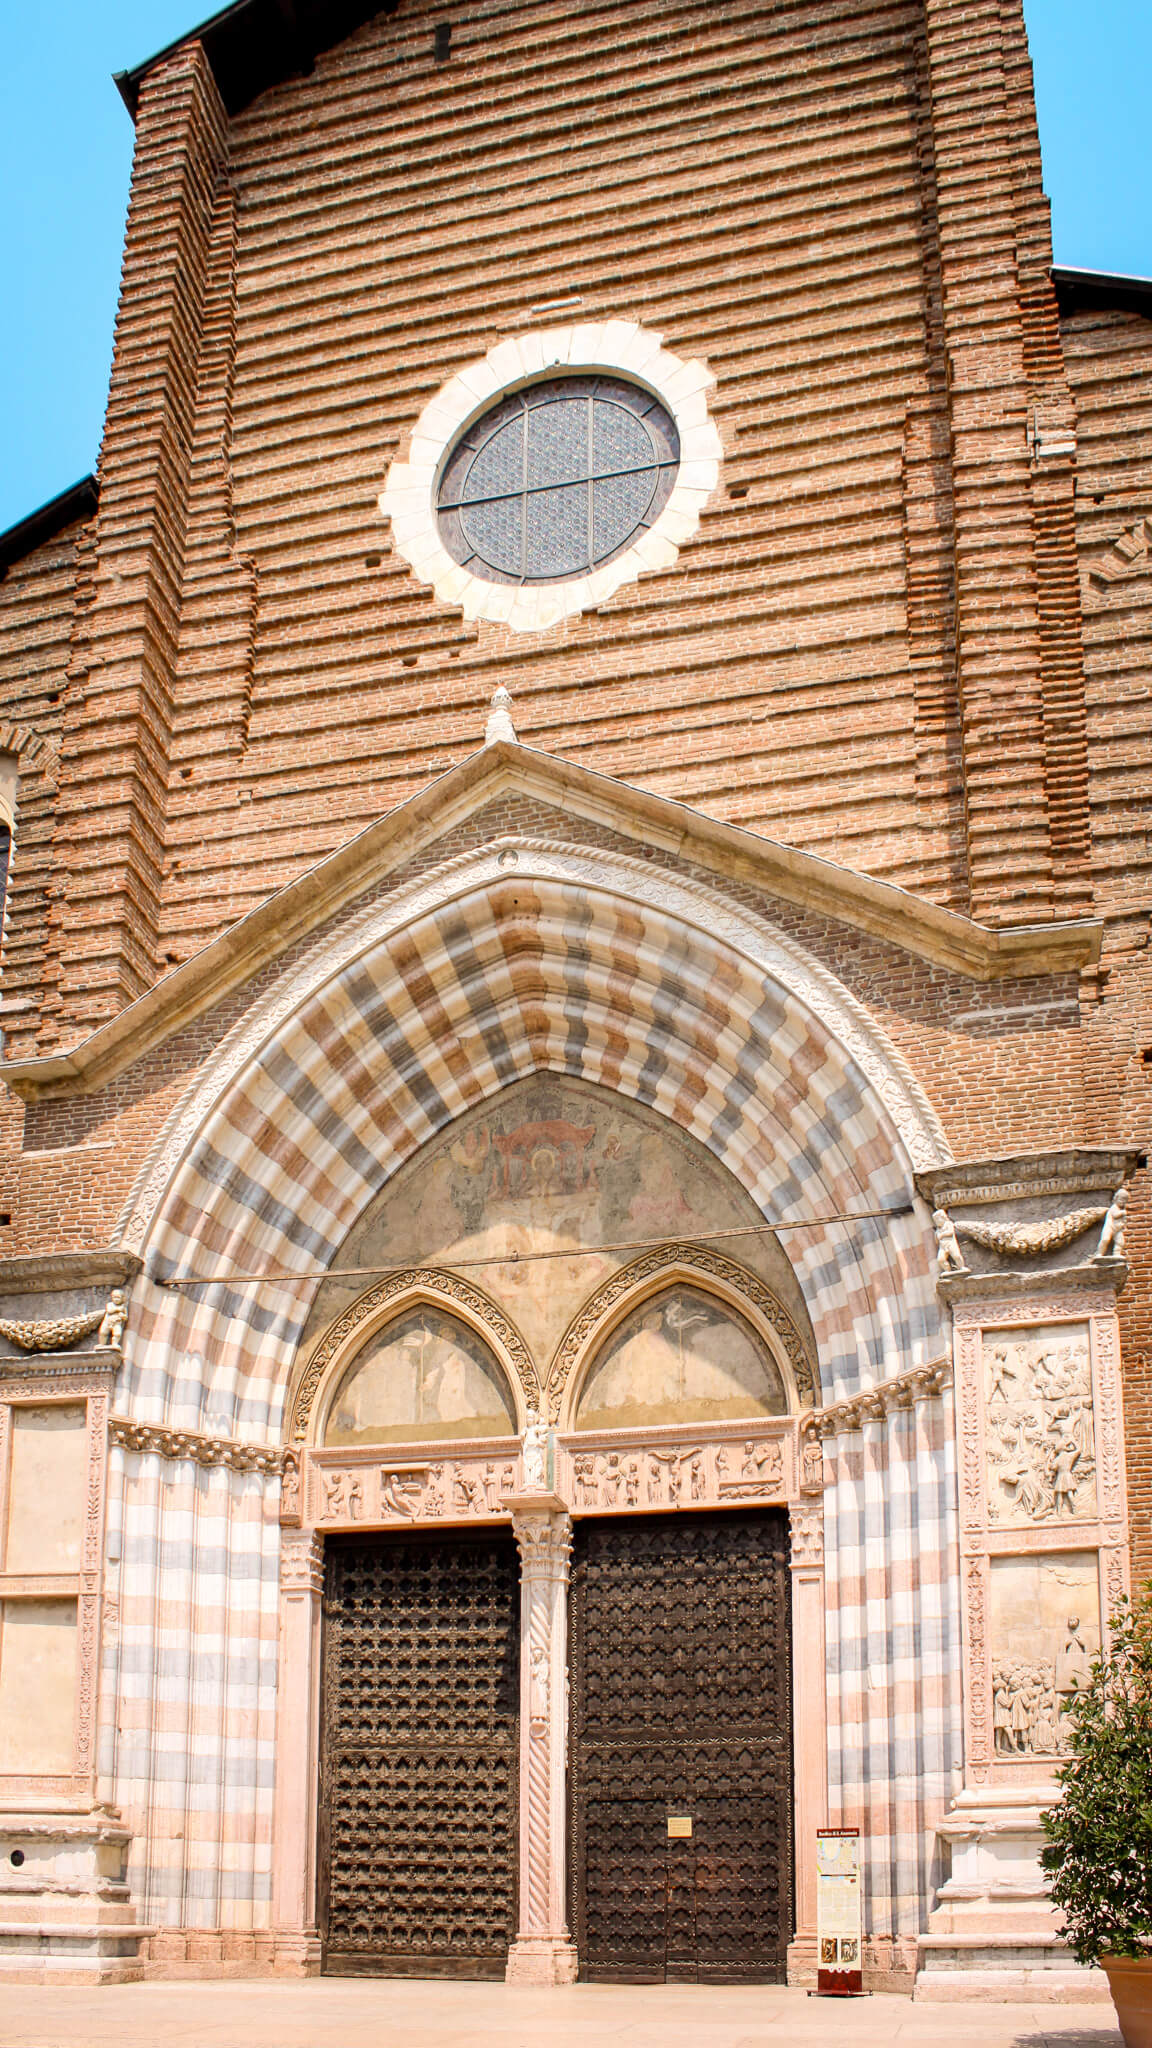 The Basilica di Santa Anastasia in Verona